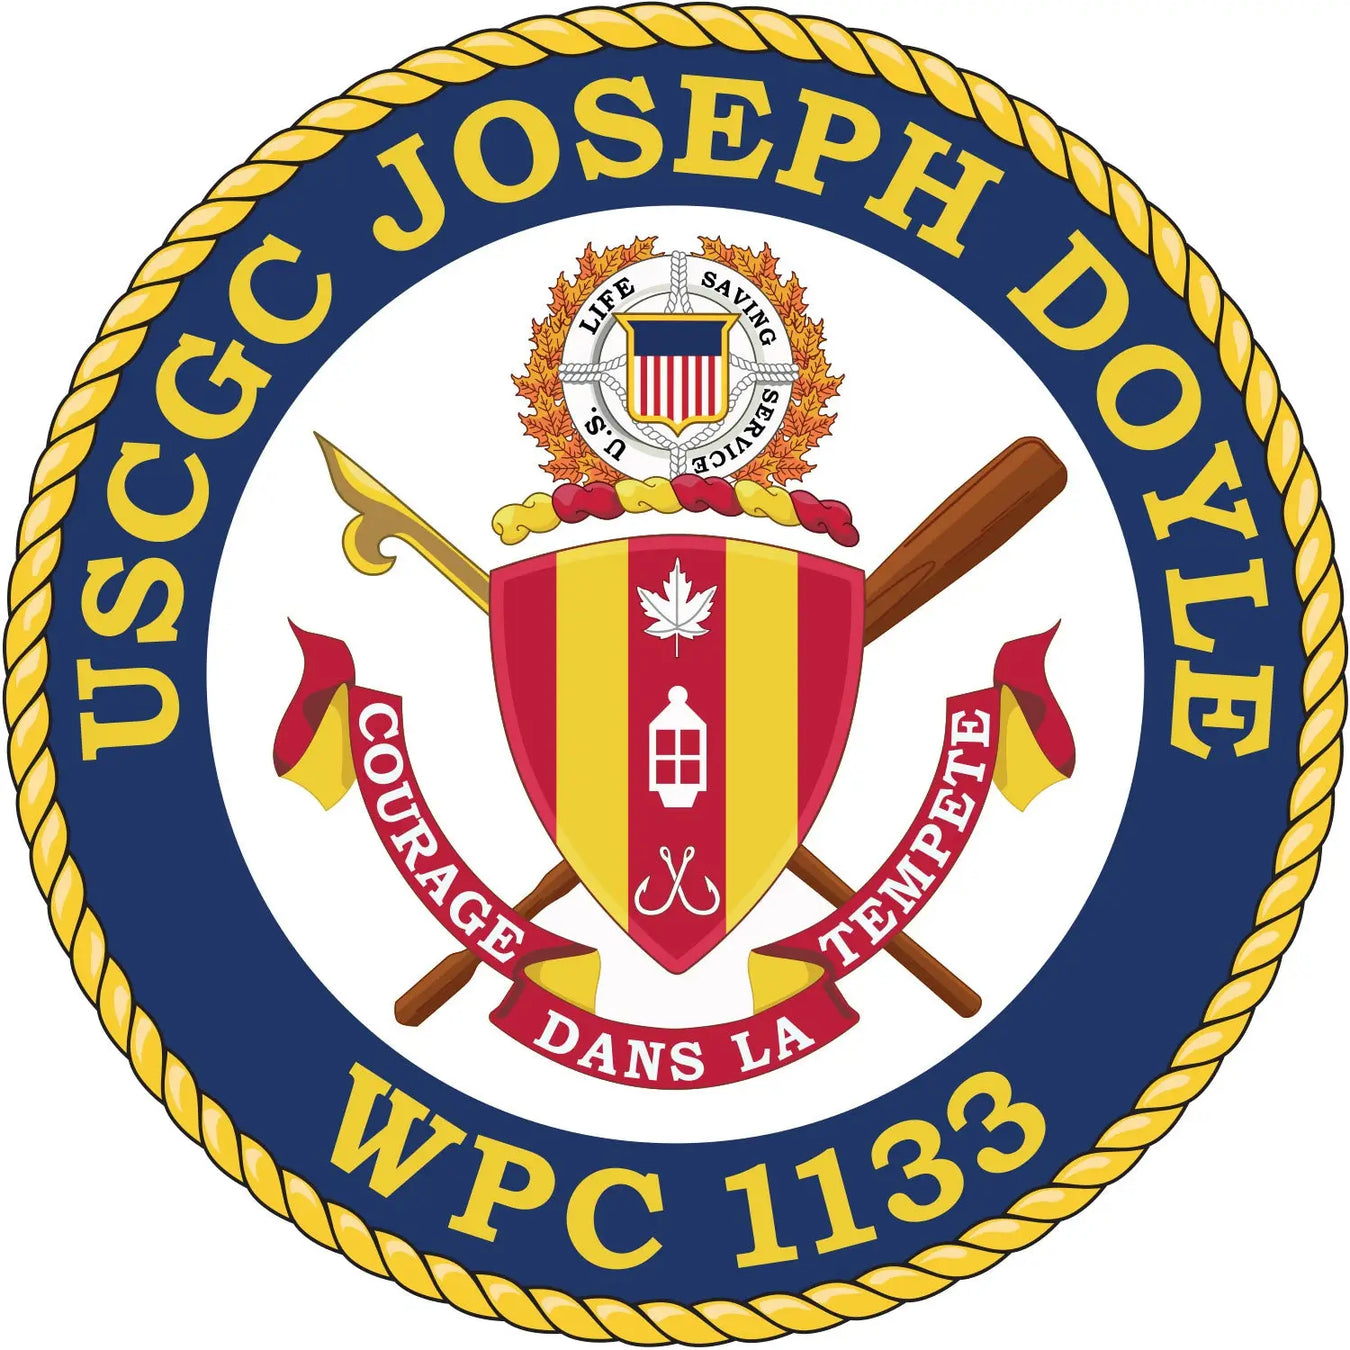 USCGC Joseph Doyle (WPC-1133)